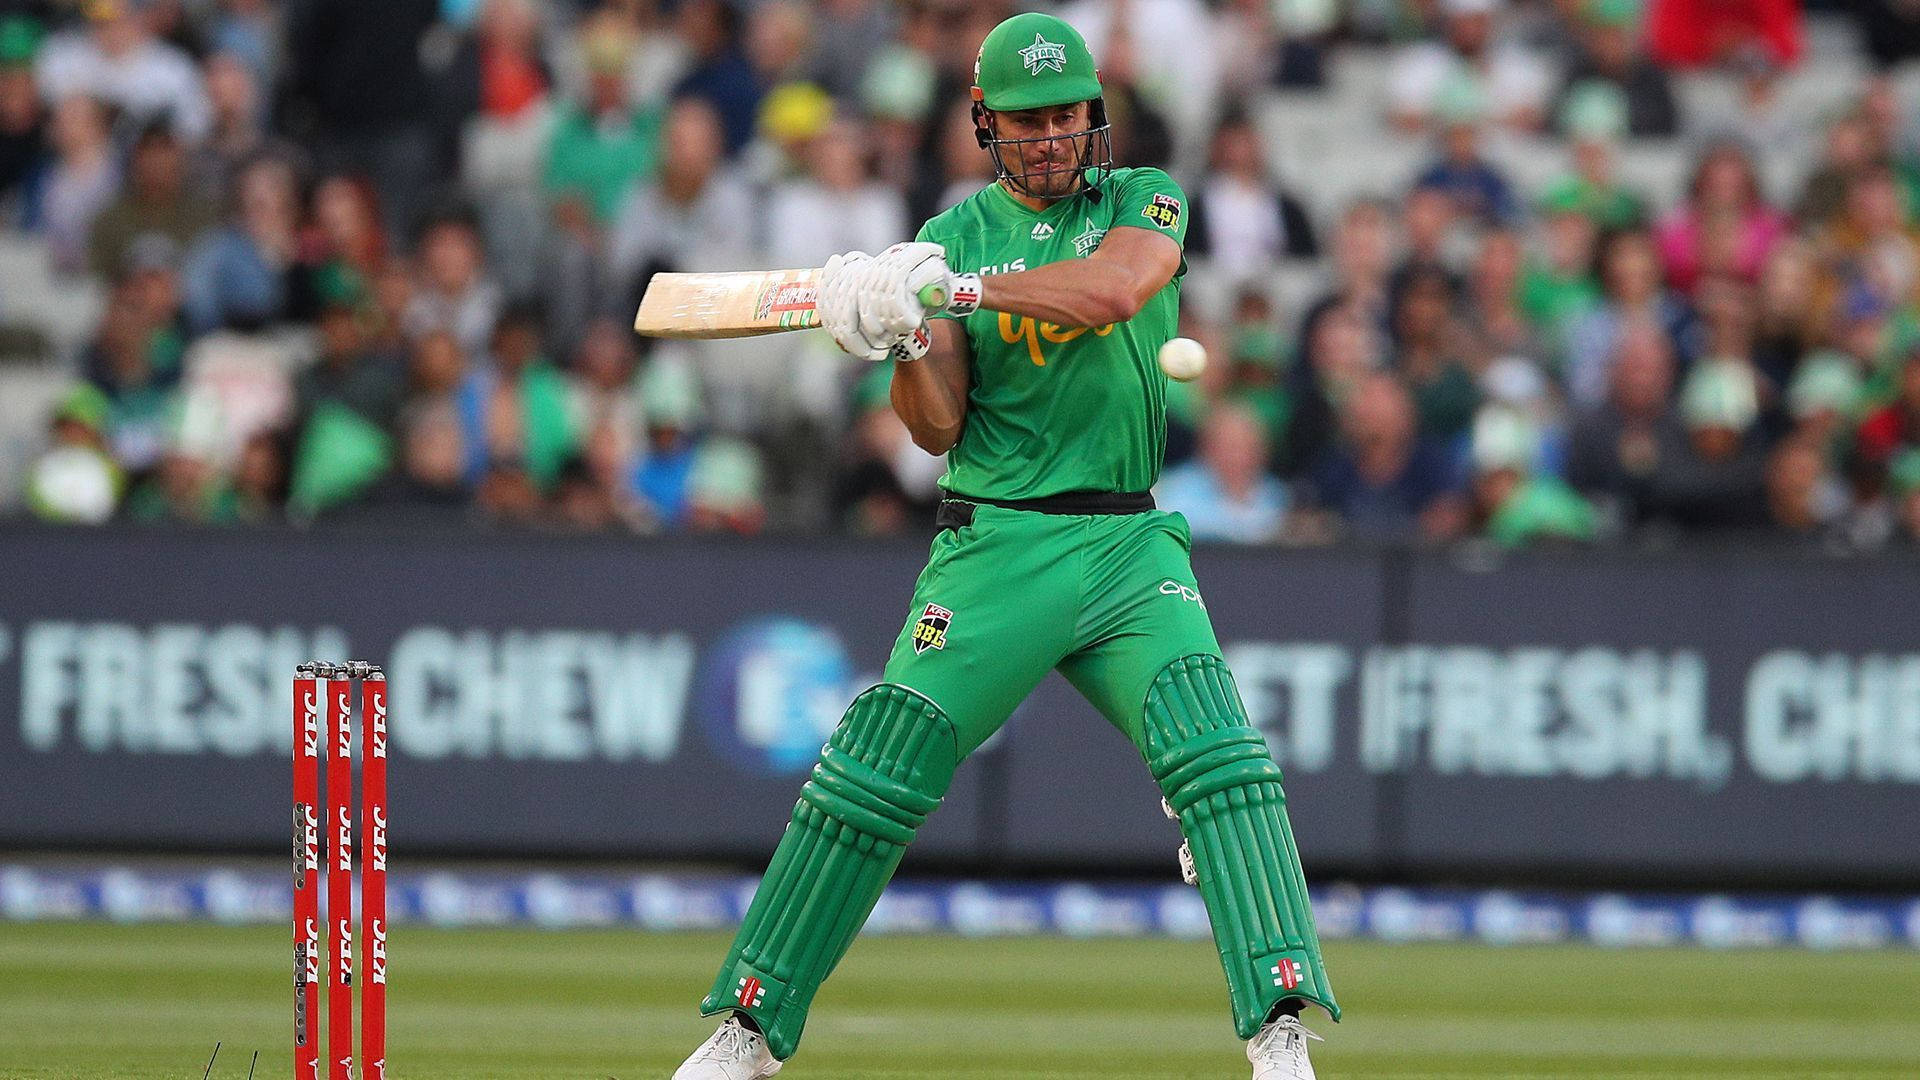 Glenn Maxwell In All-green Cricket Uniform